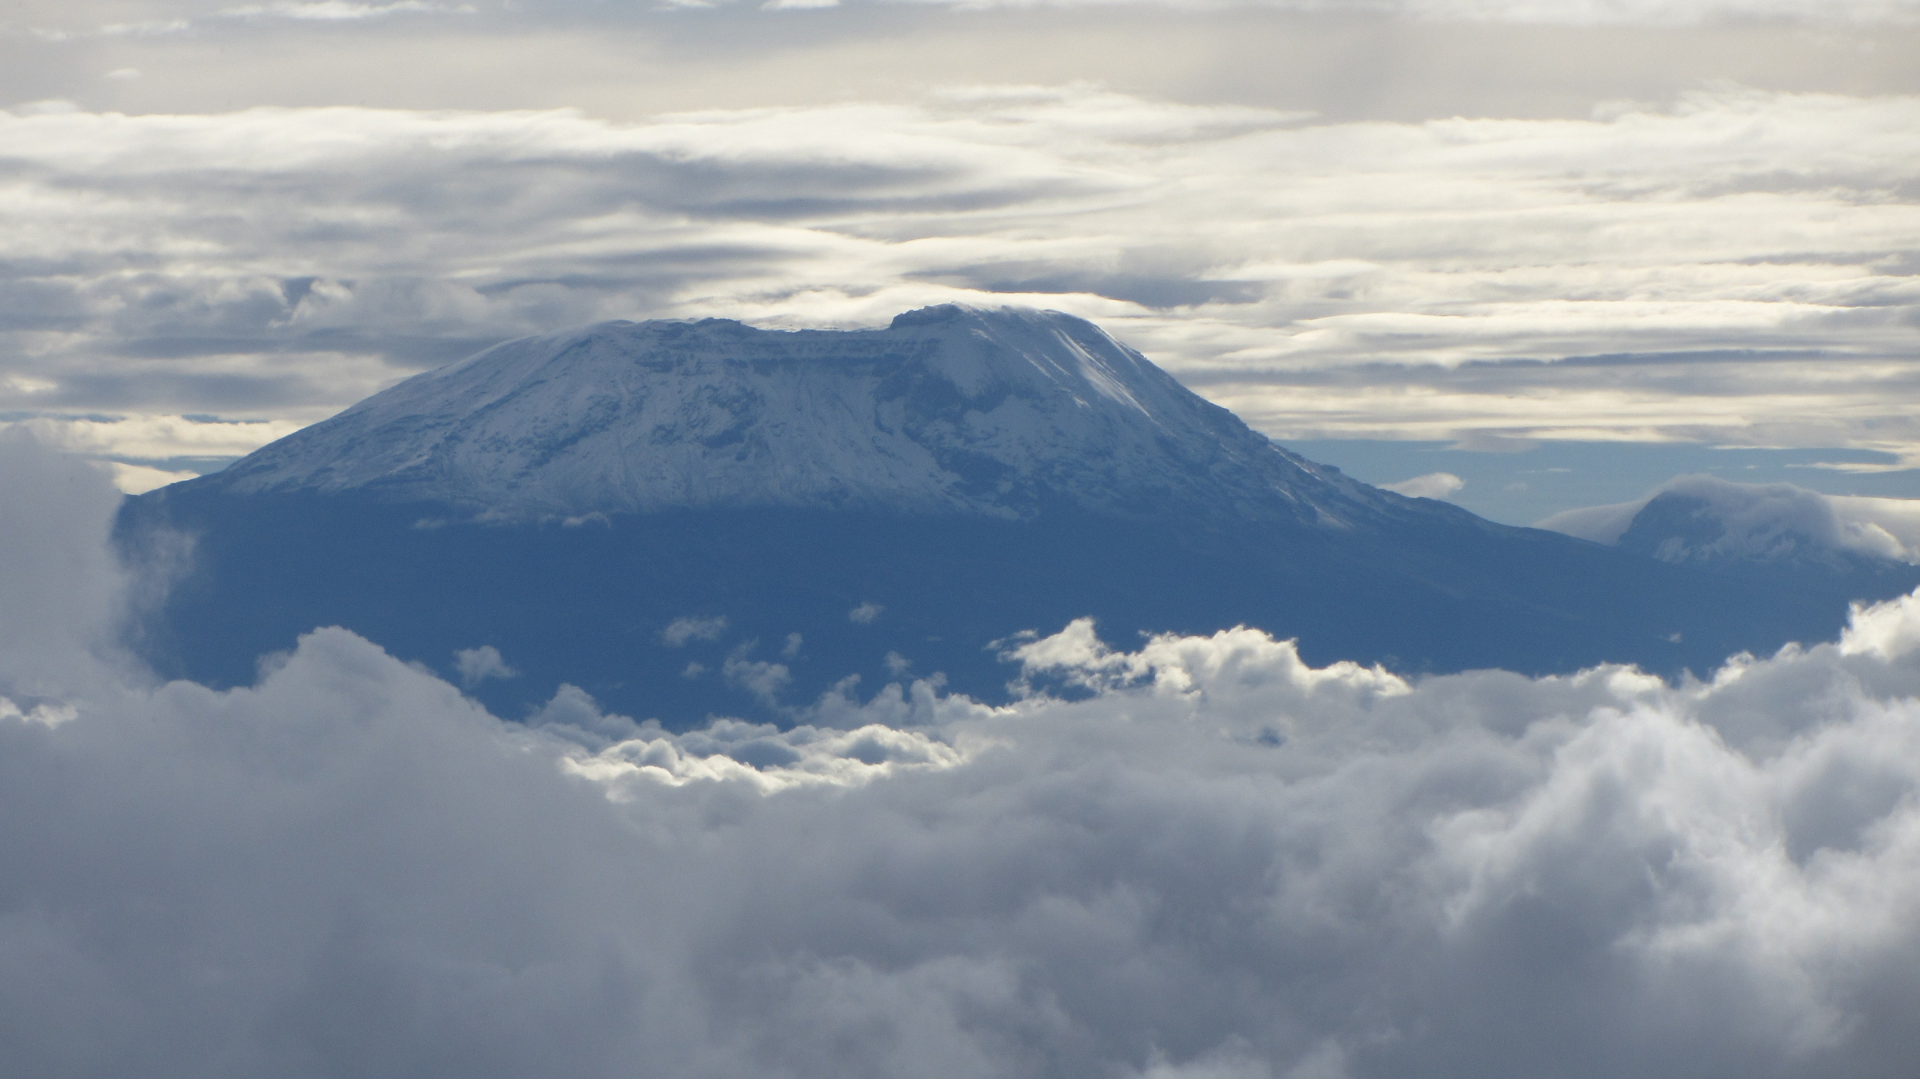 Climb Kilimanjaro for Good